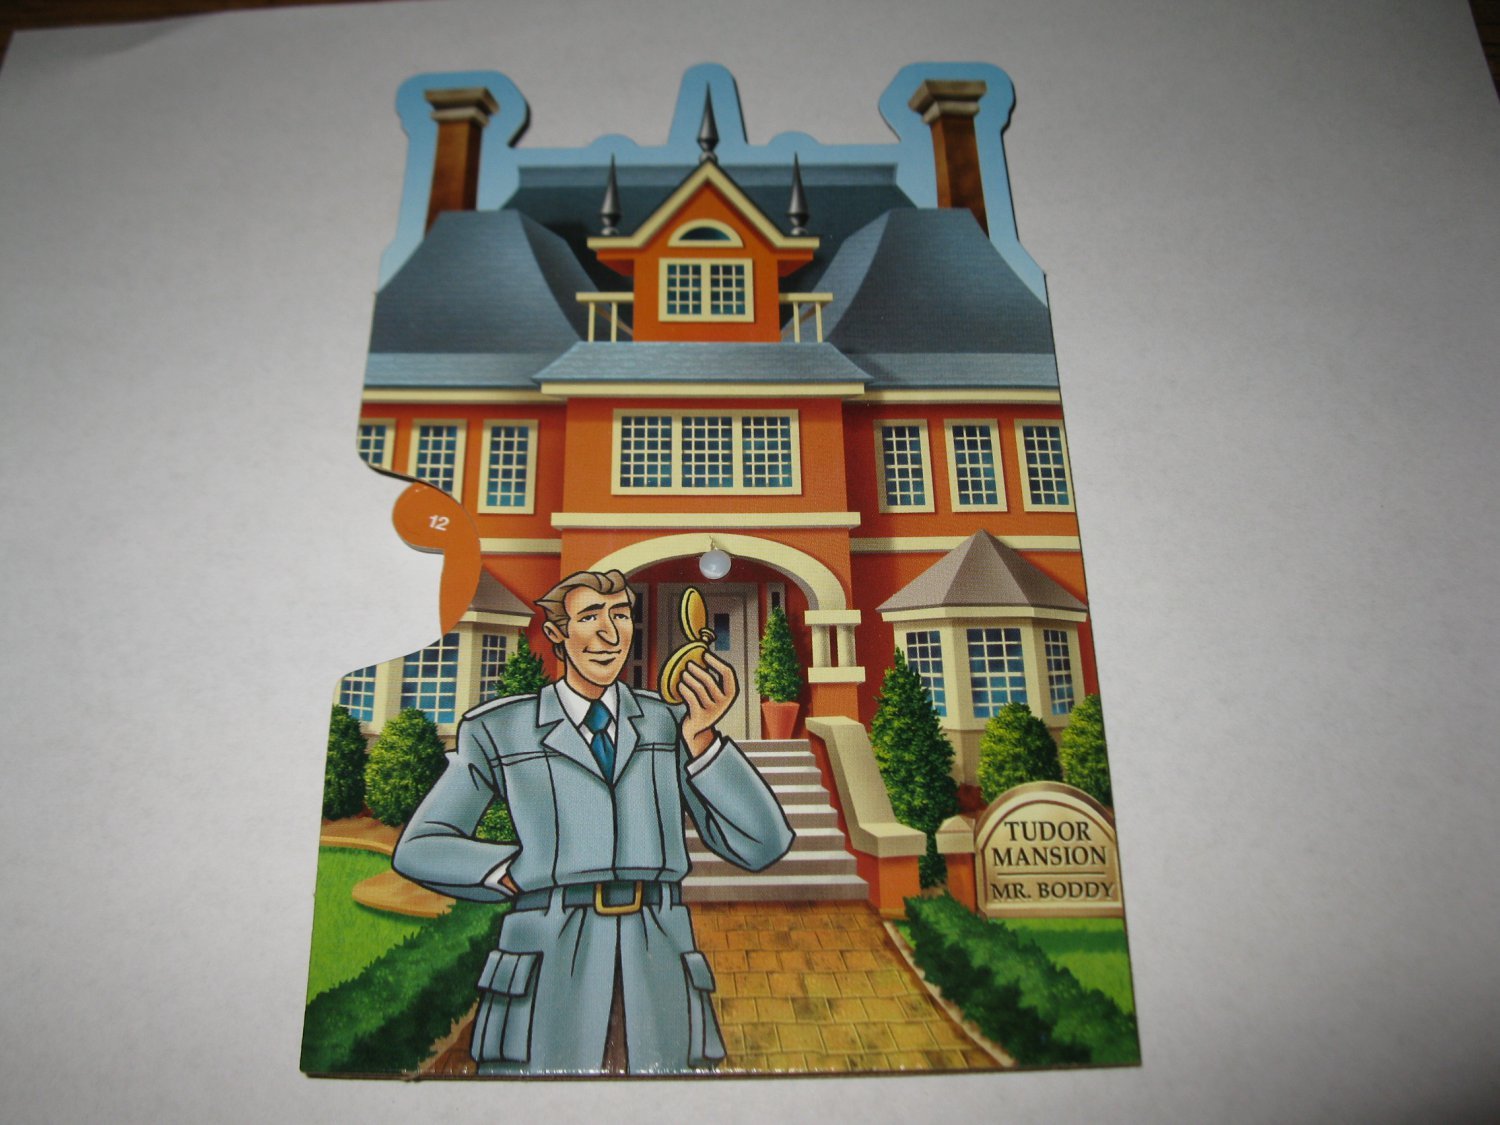 2005 Clue Mysteries Board Game Piece: Tudor Mansion orange House - $2.00